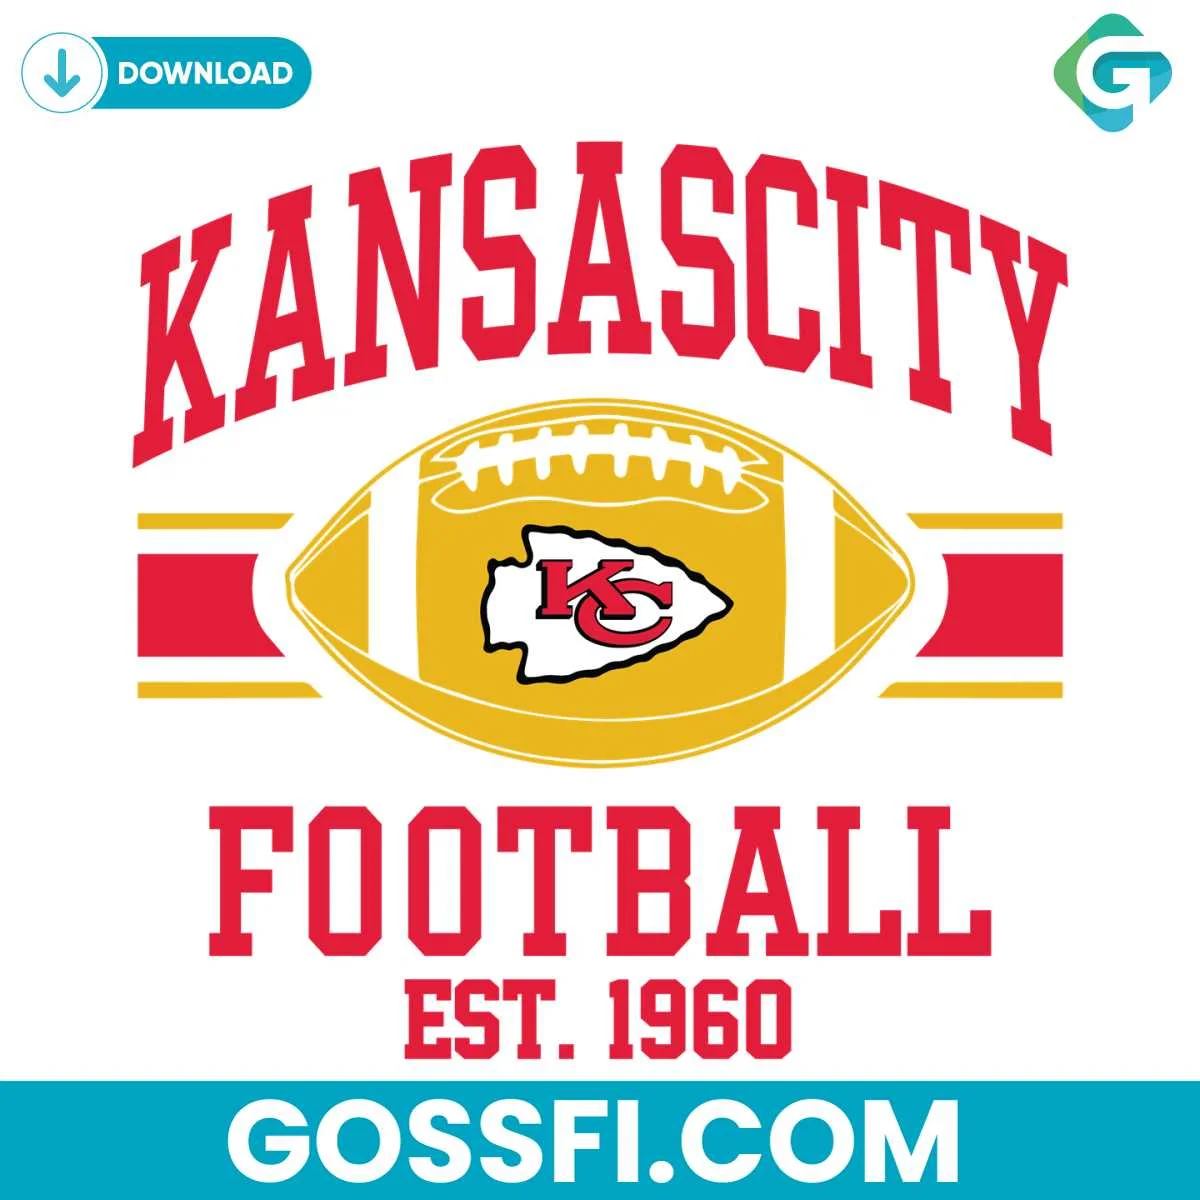 football-kansas-city-chiefs-digital-download-svg